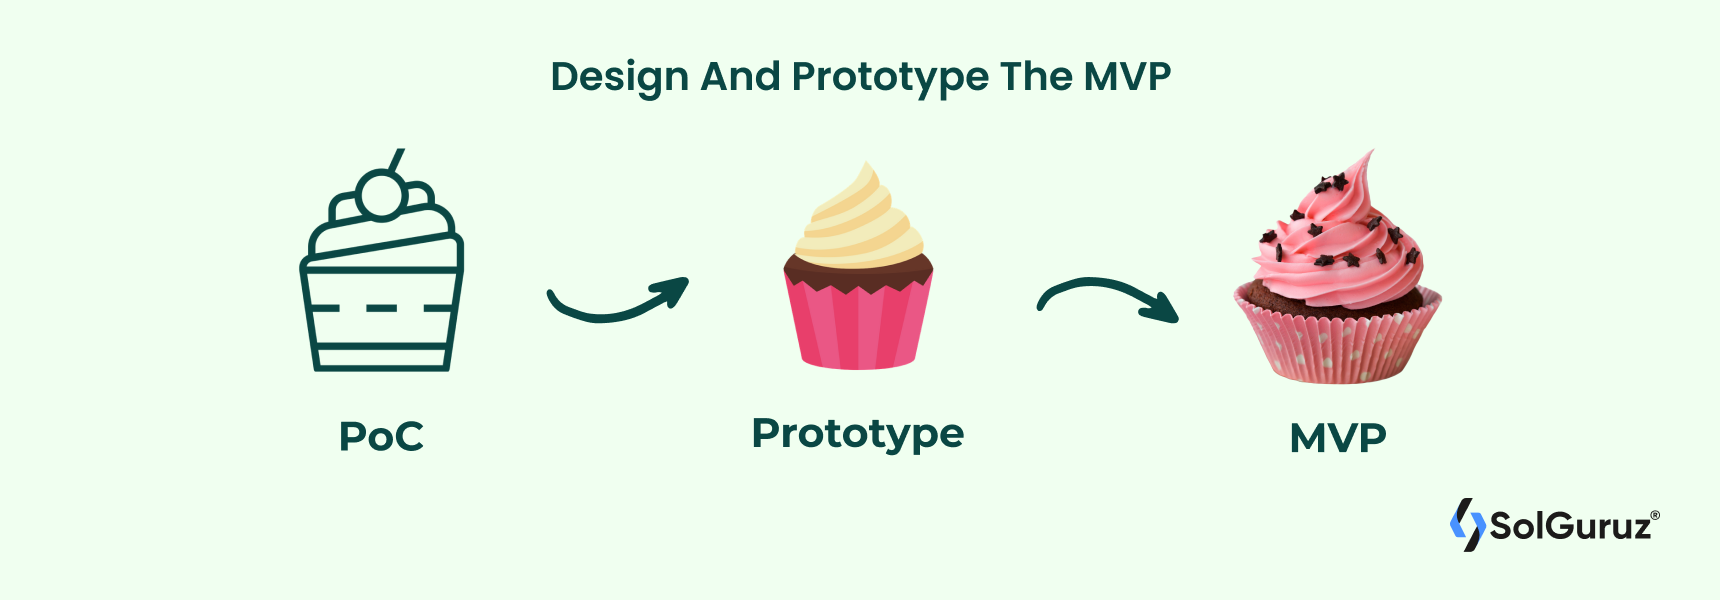 Design And Prototype The MVP